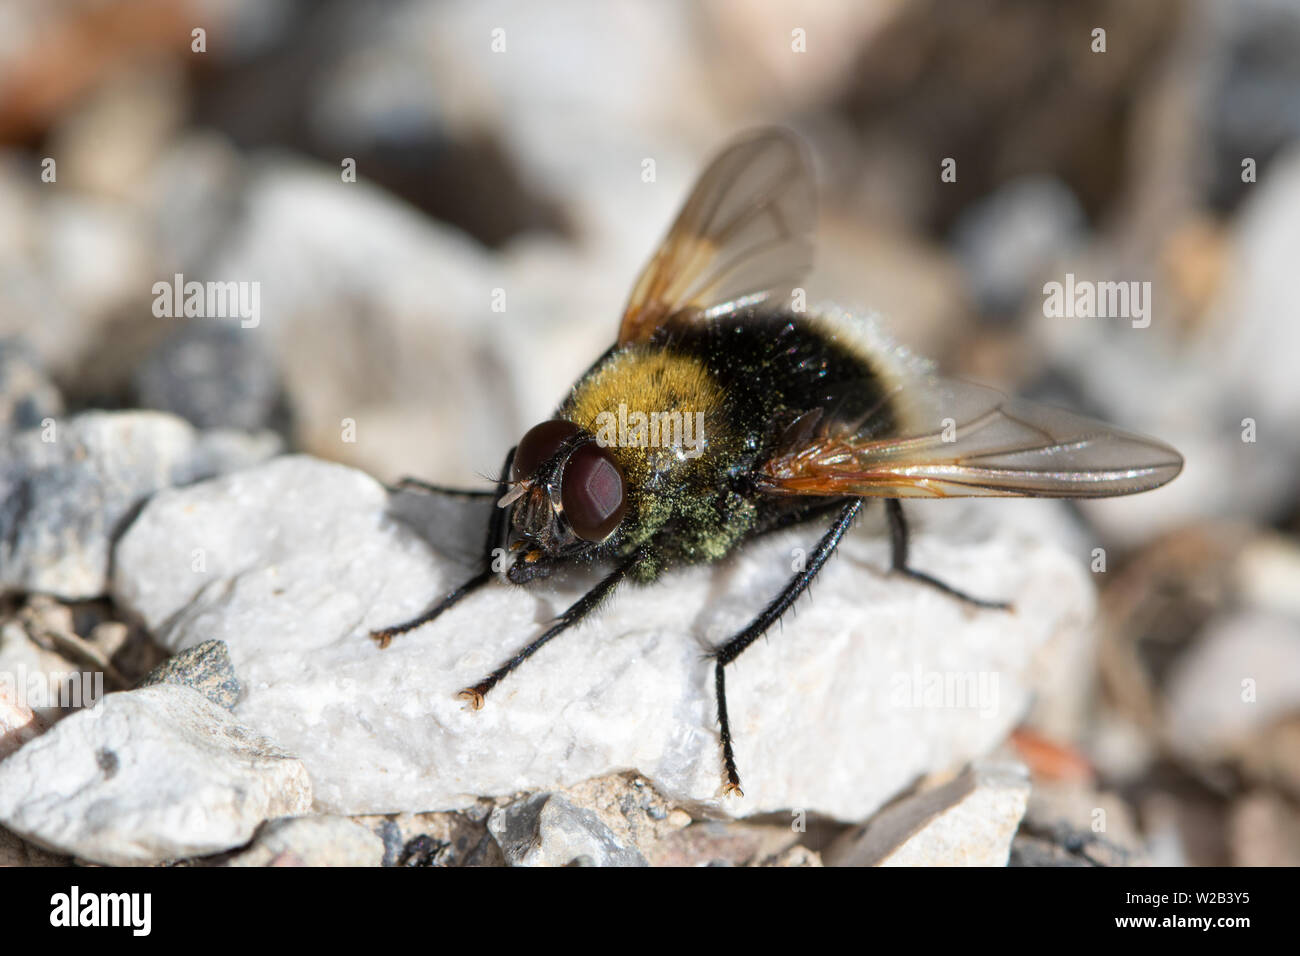 Mesembrina mystacea - a bumblebee-mimic from the House Fly family (Diptera: Muscidae) Stock Photo